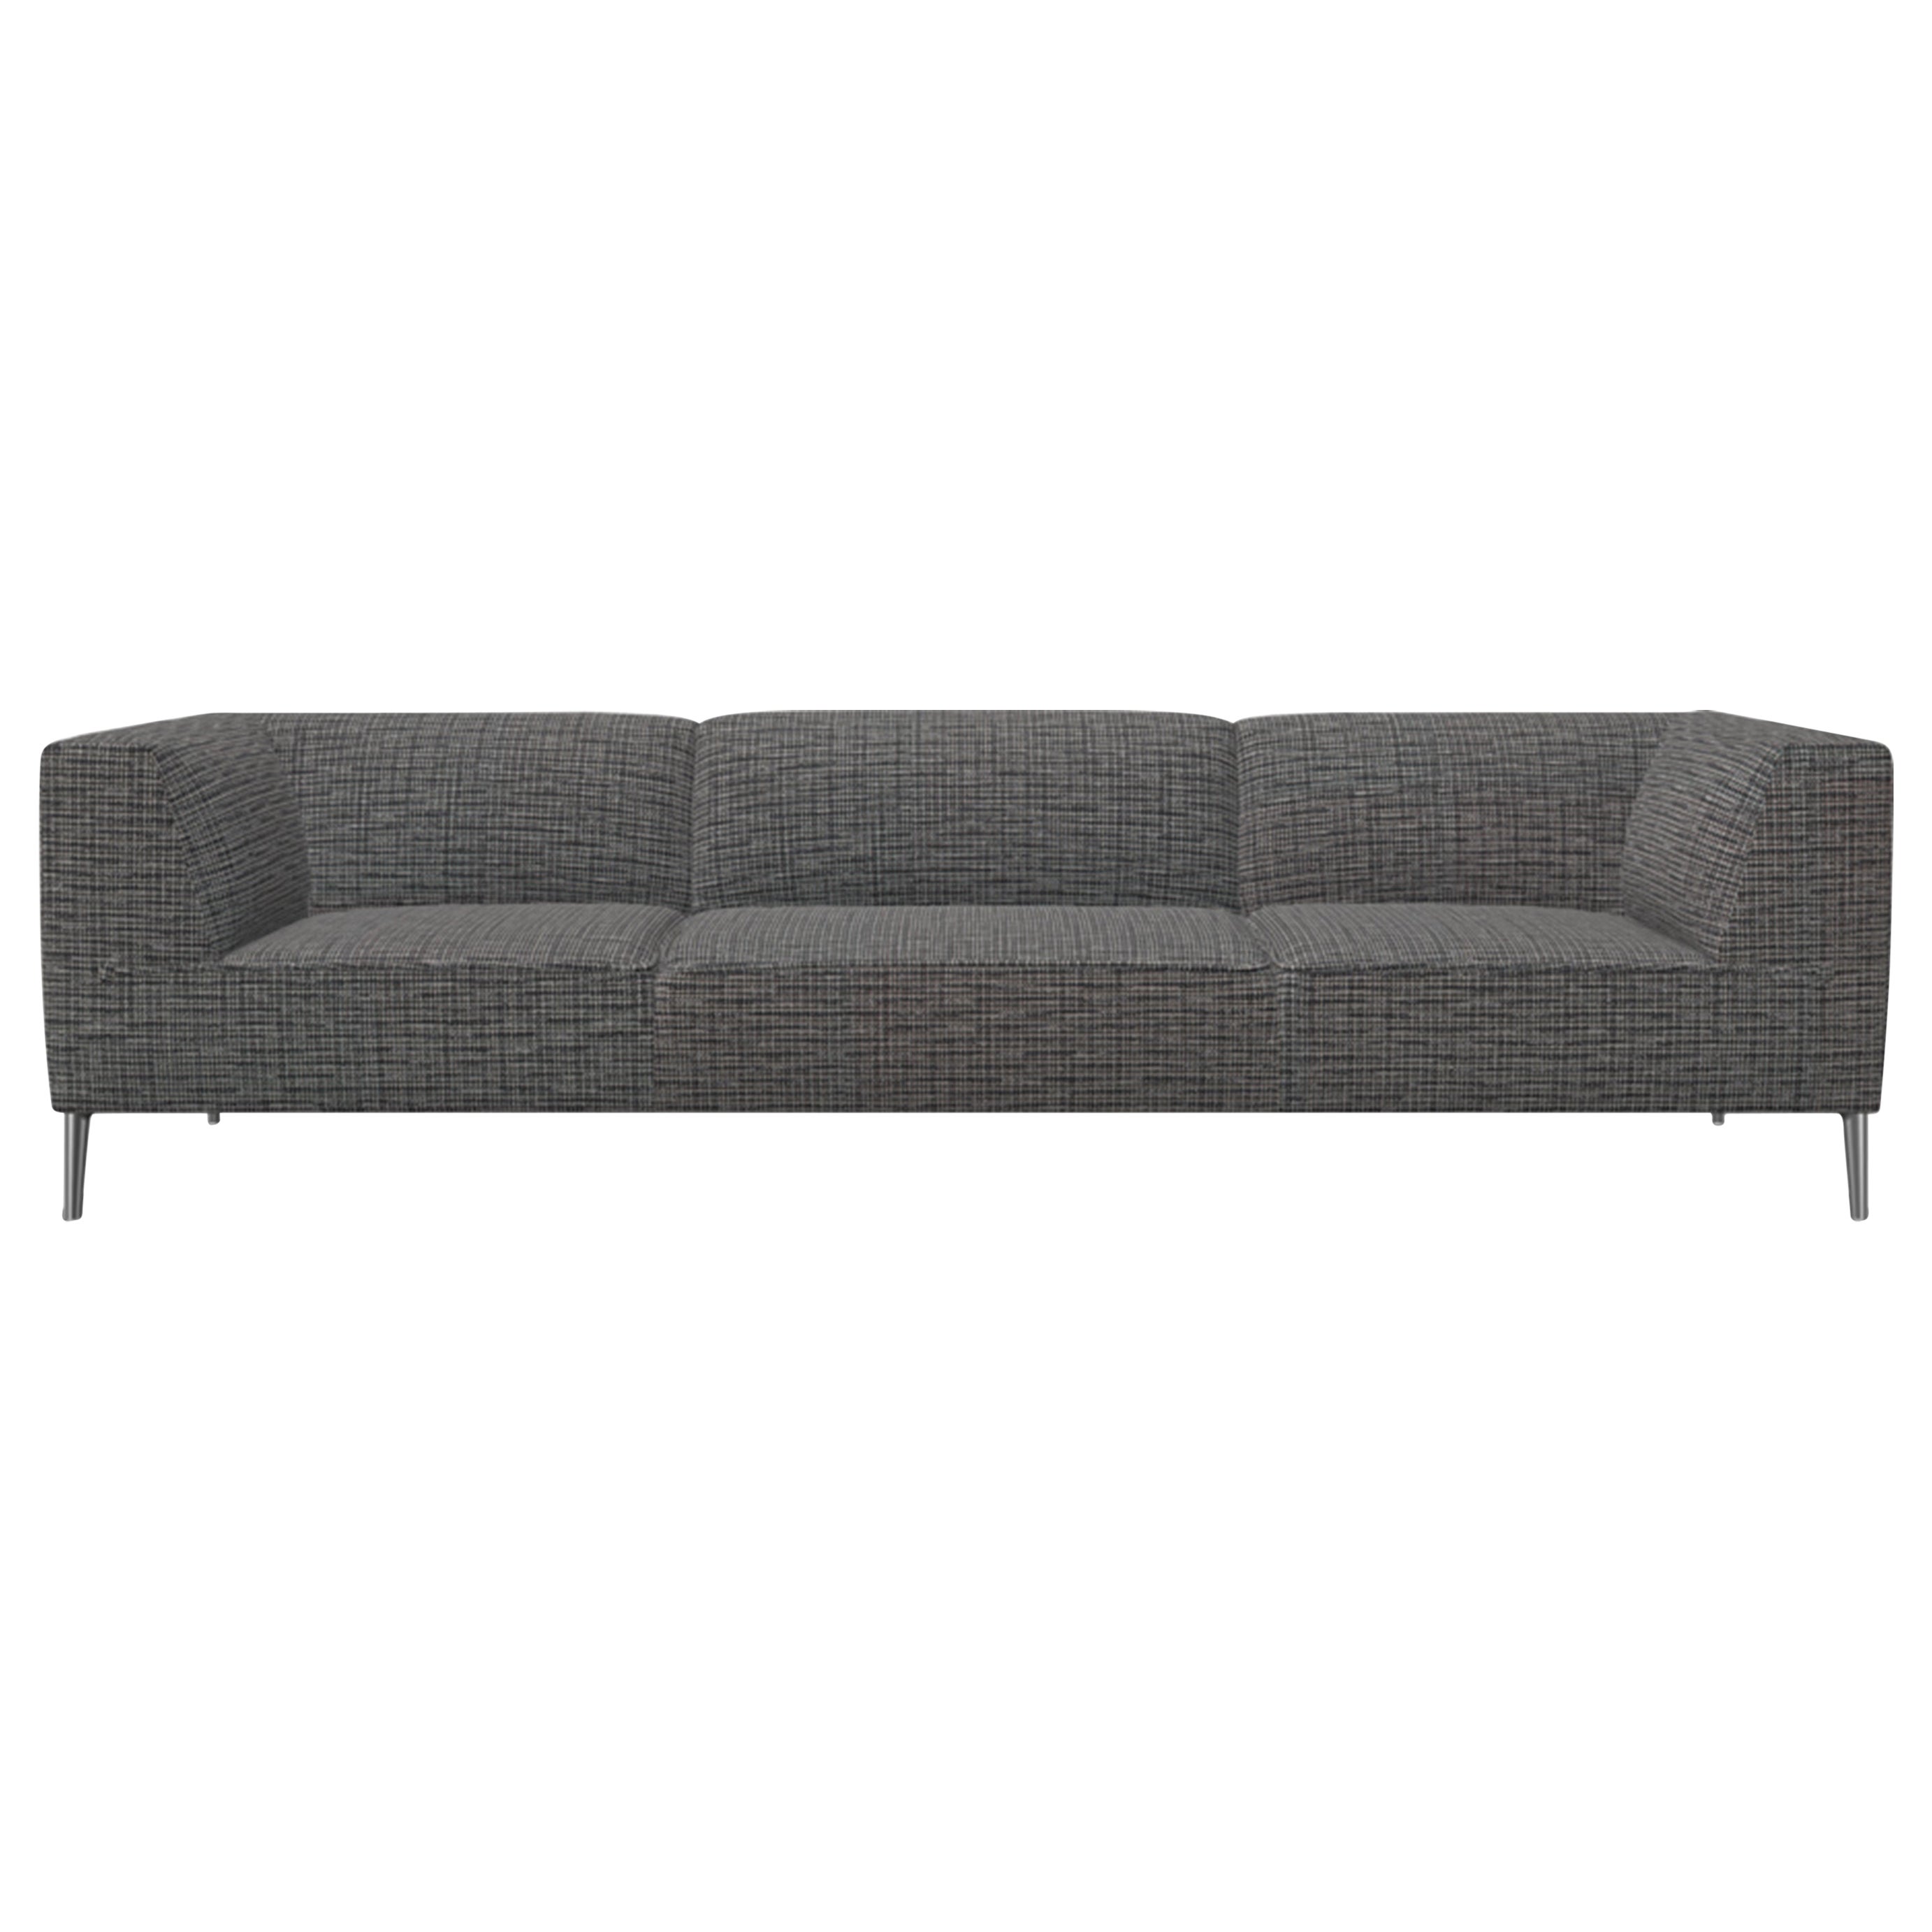 Moooi Dreisitziges Sofa So Good in Boucle-Polsterung mit polierten Aluminiumfüßen